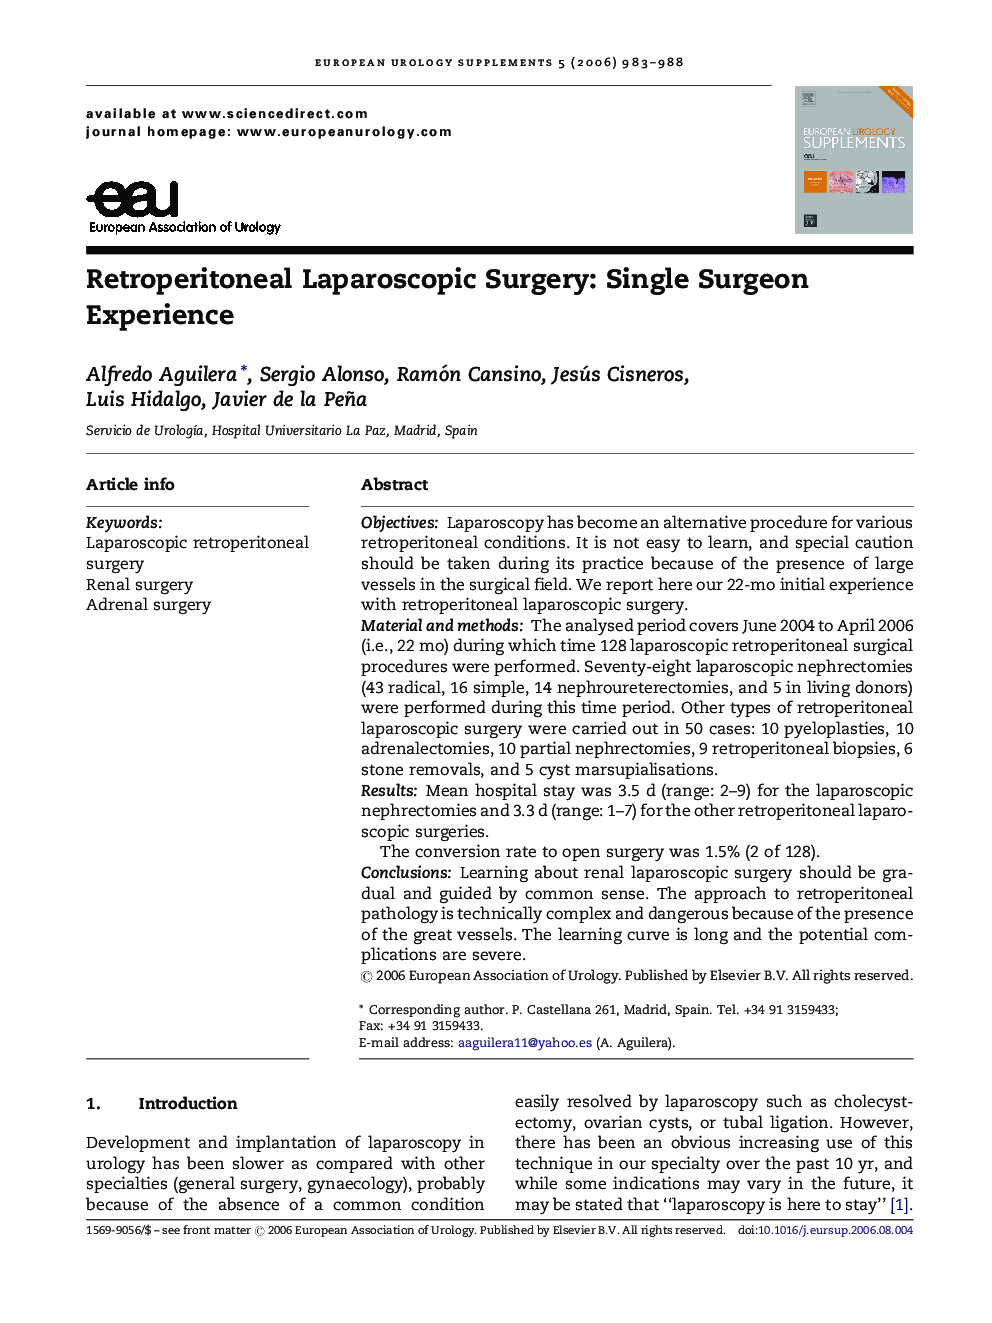 Retroperitoneal Laparoscopic Surgery: Single Surgeon Experience